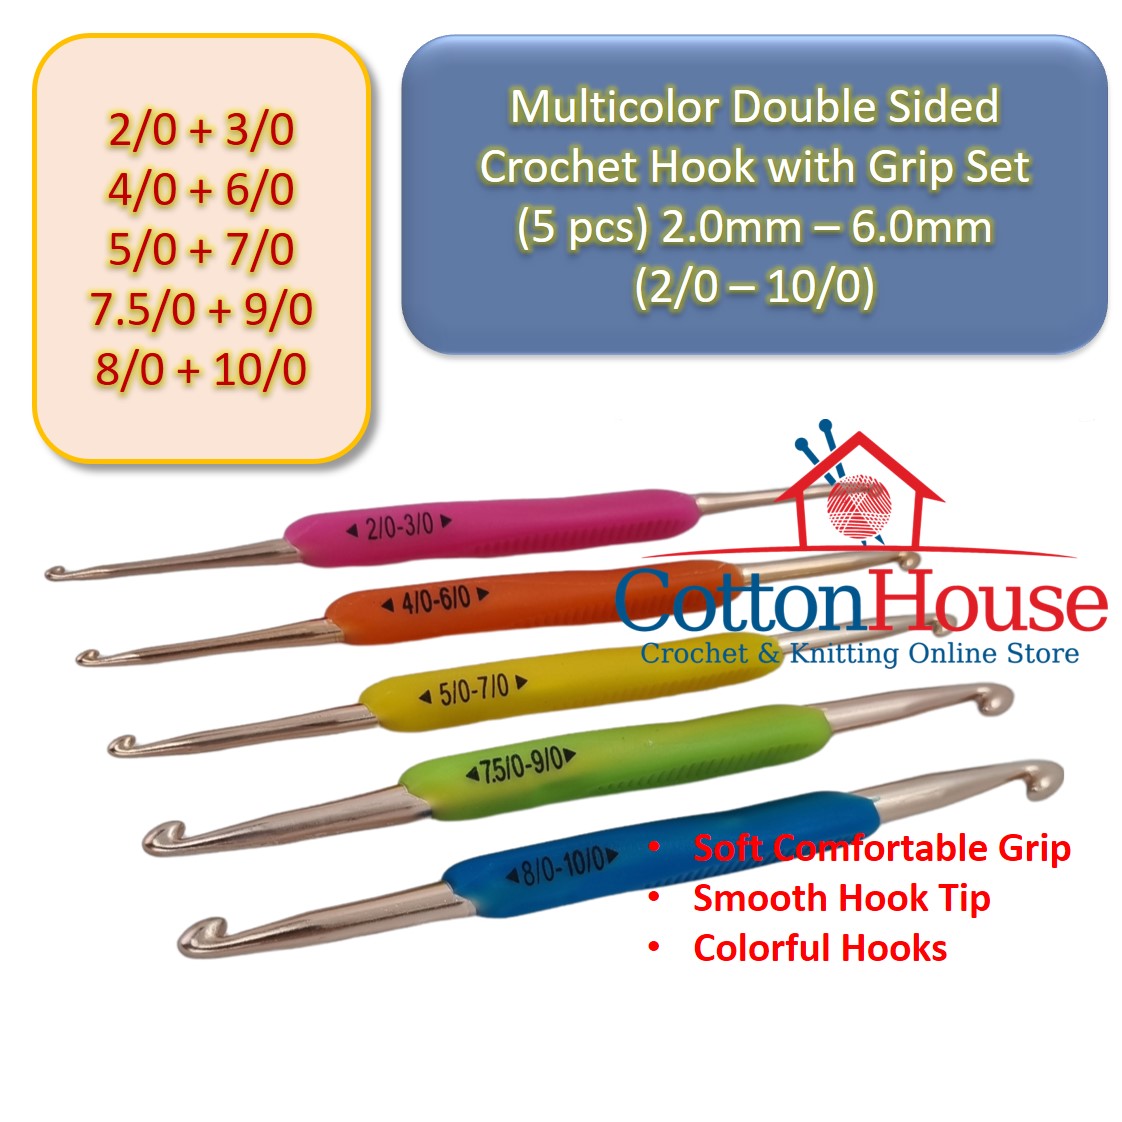 5 pcs Multicolor Double Sided Crochet Hook with Grip (2/0-10/0) Set Jarum Kait